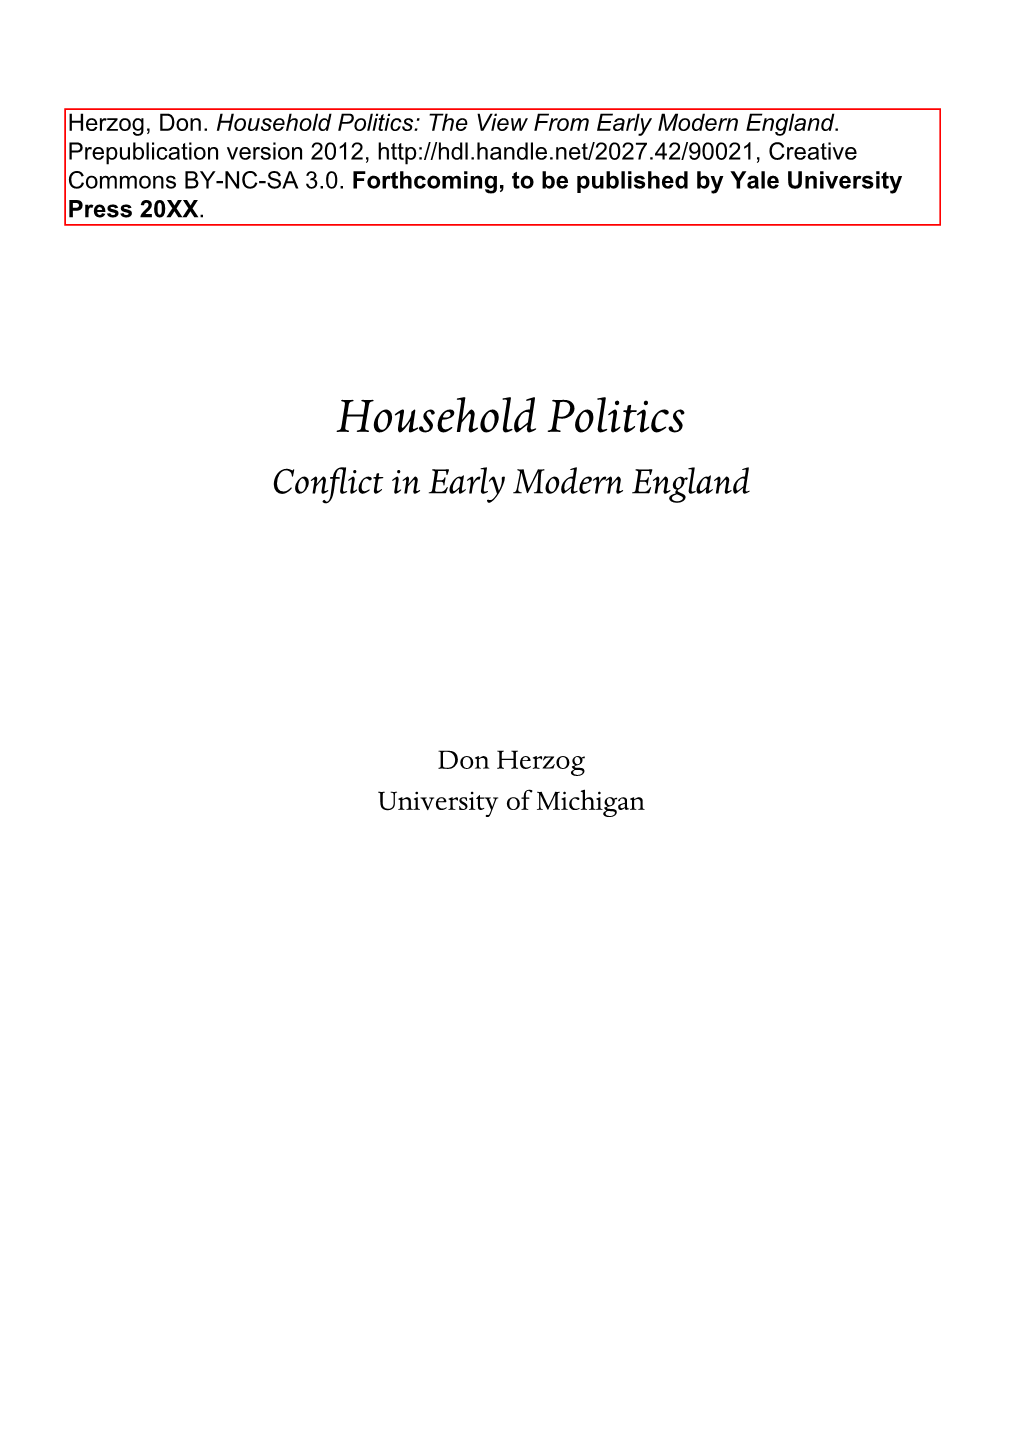 Don Herzog, Household Politics